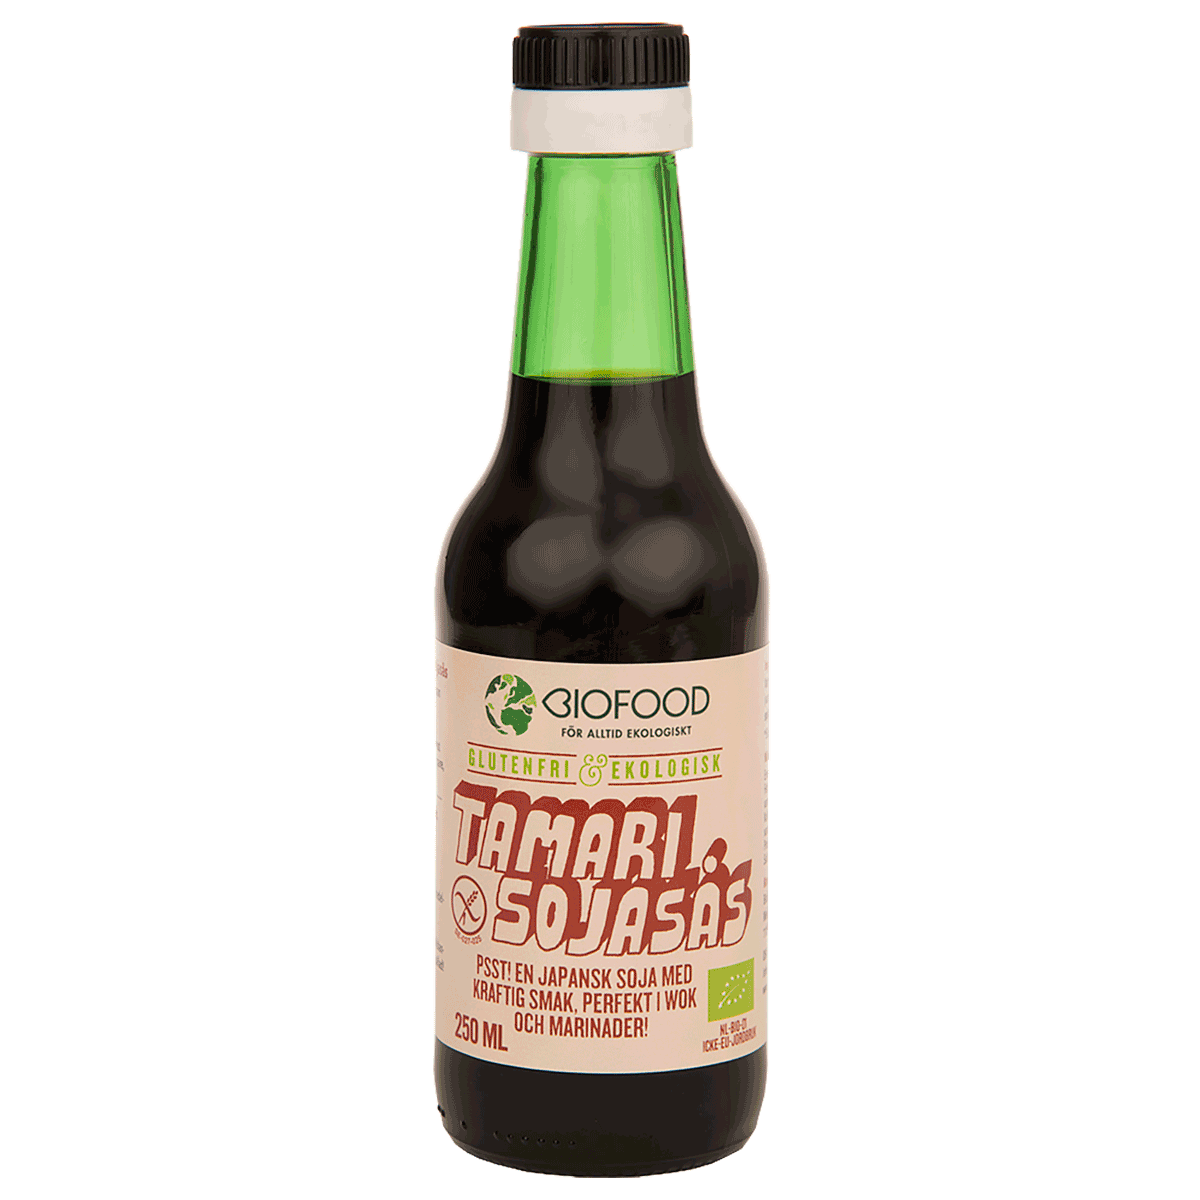 Biofood's Japanese Tamari Soy Sauce '